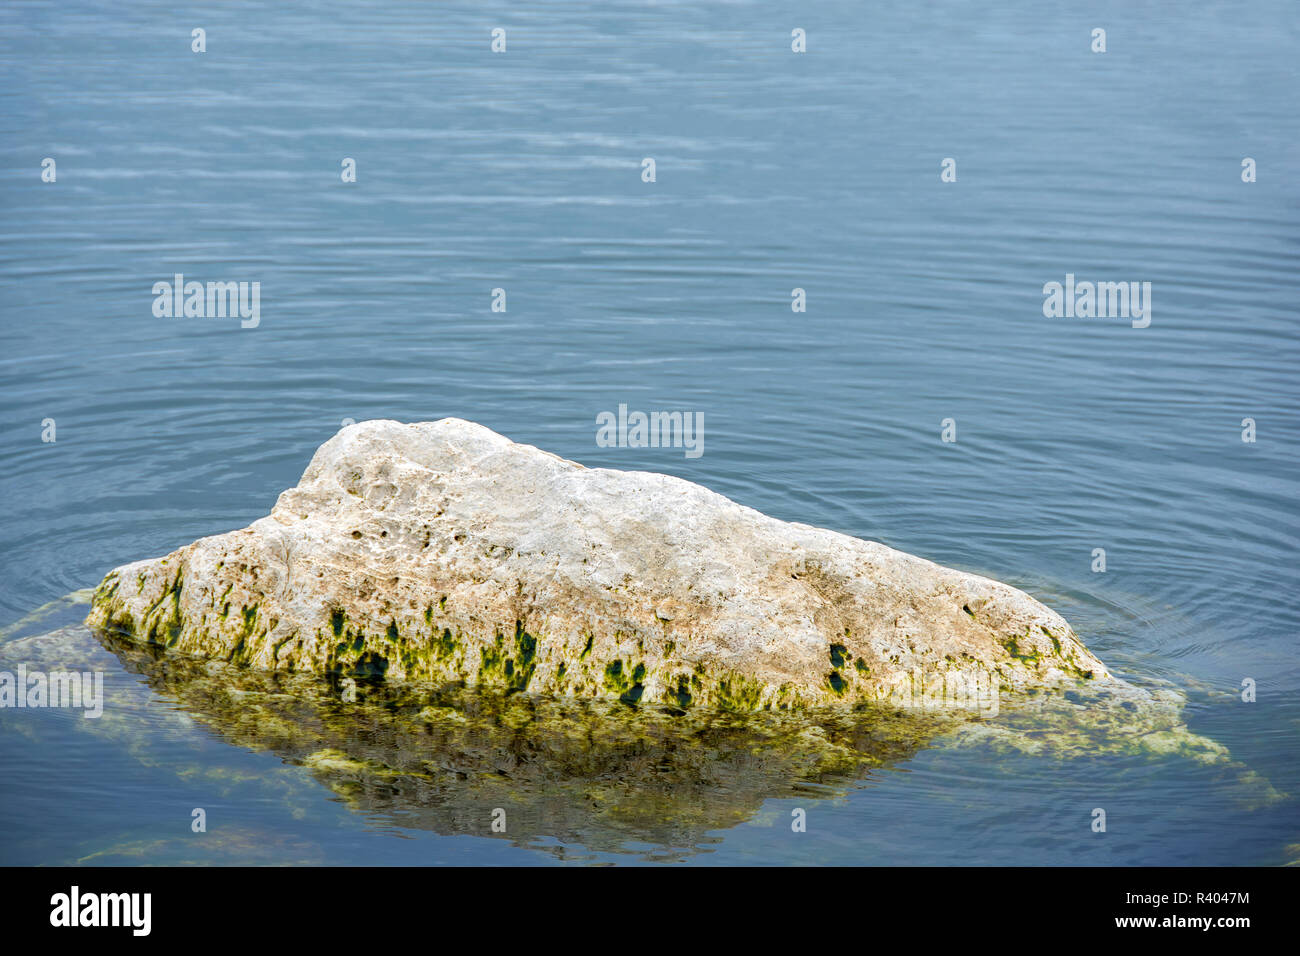 large rock with algae growth in Lake Michigan water Stock Photo